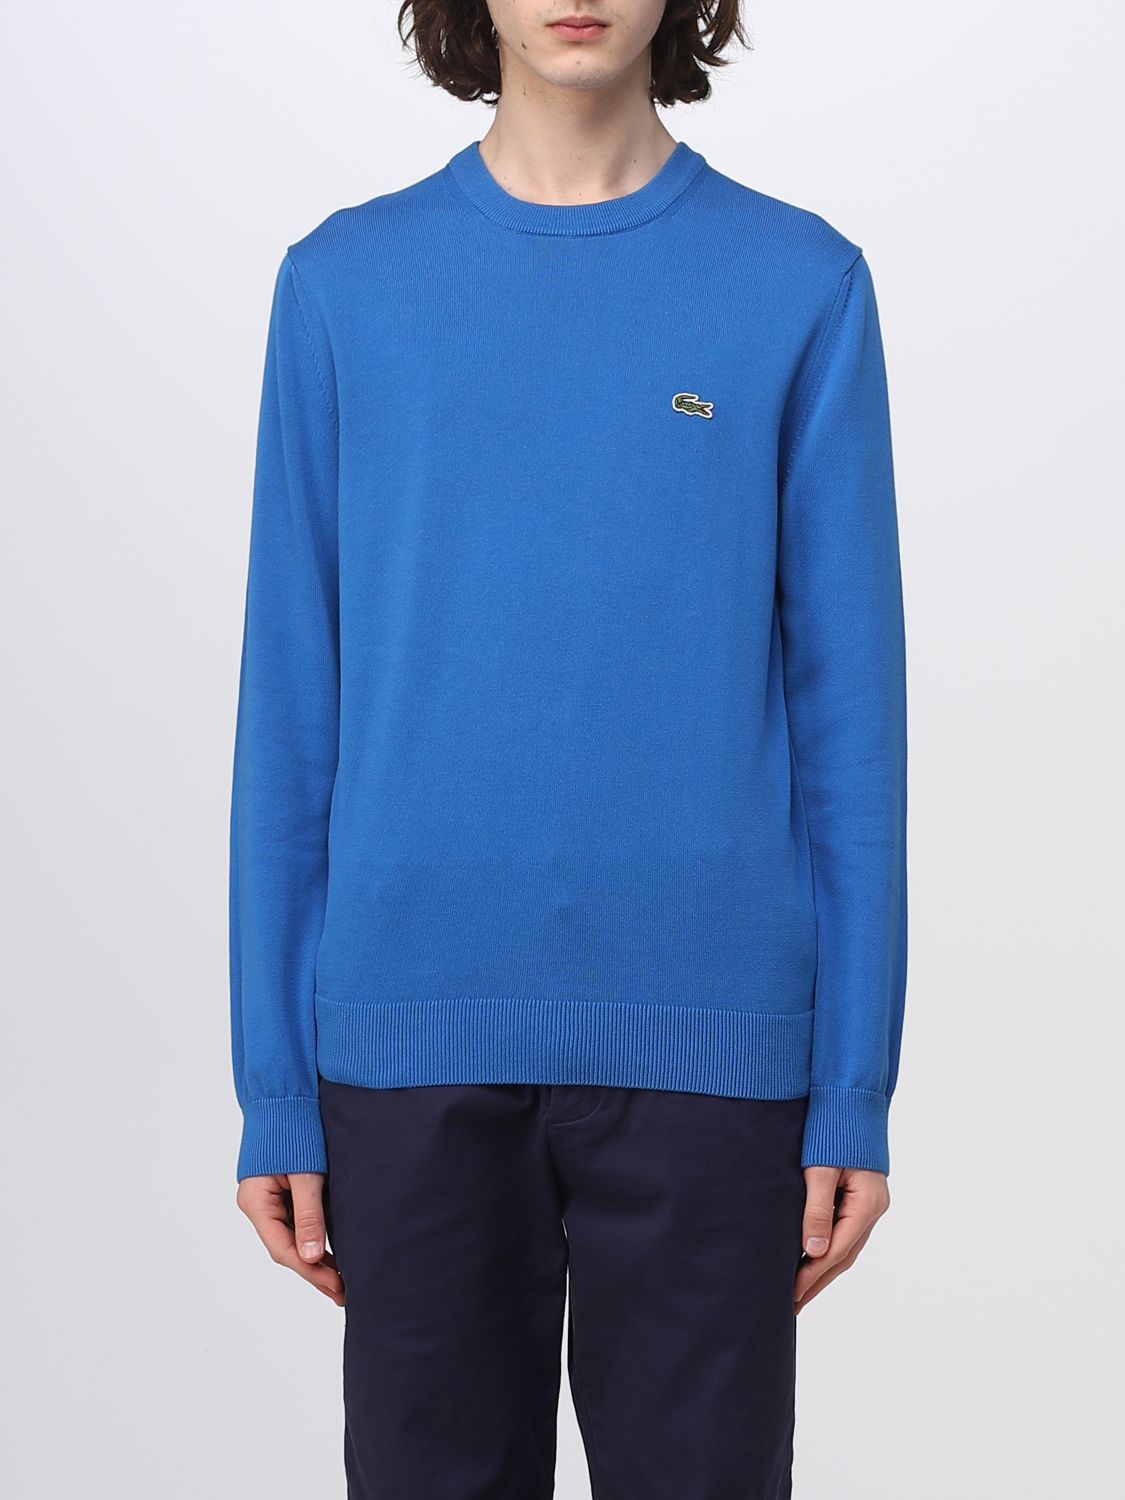 LACOSTE: sweater for man - Blue | Lacoste sweater AH1985 online on ...